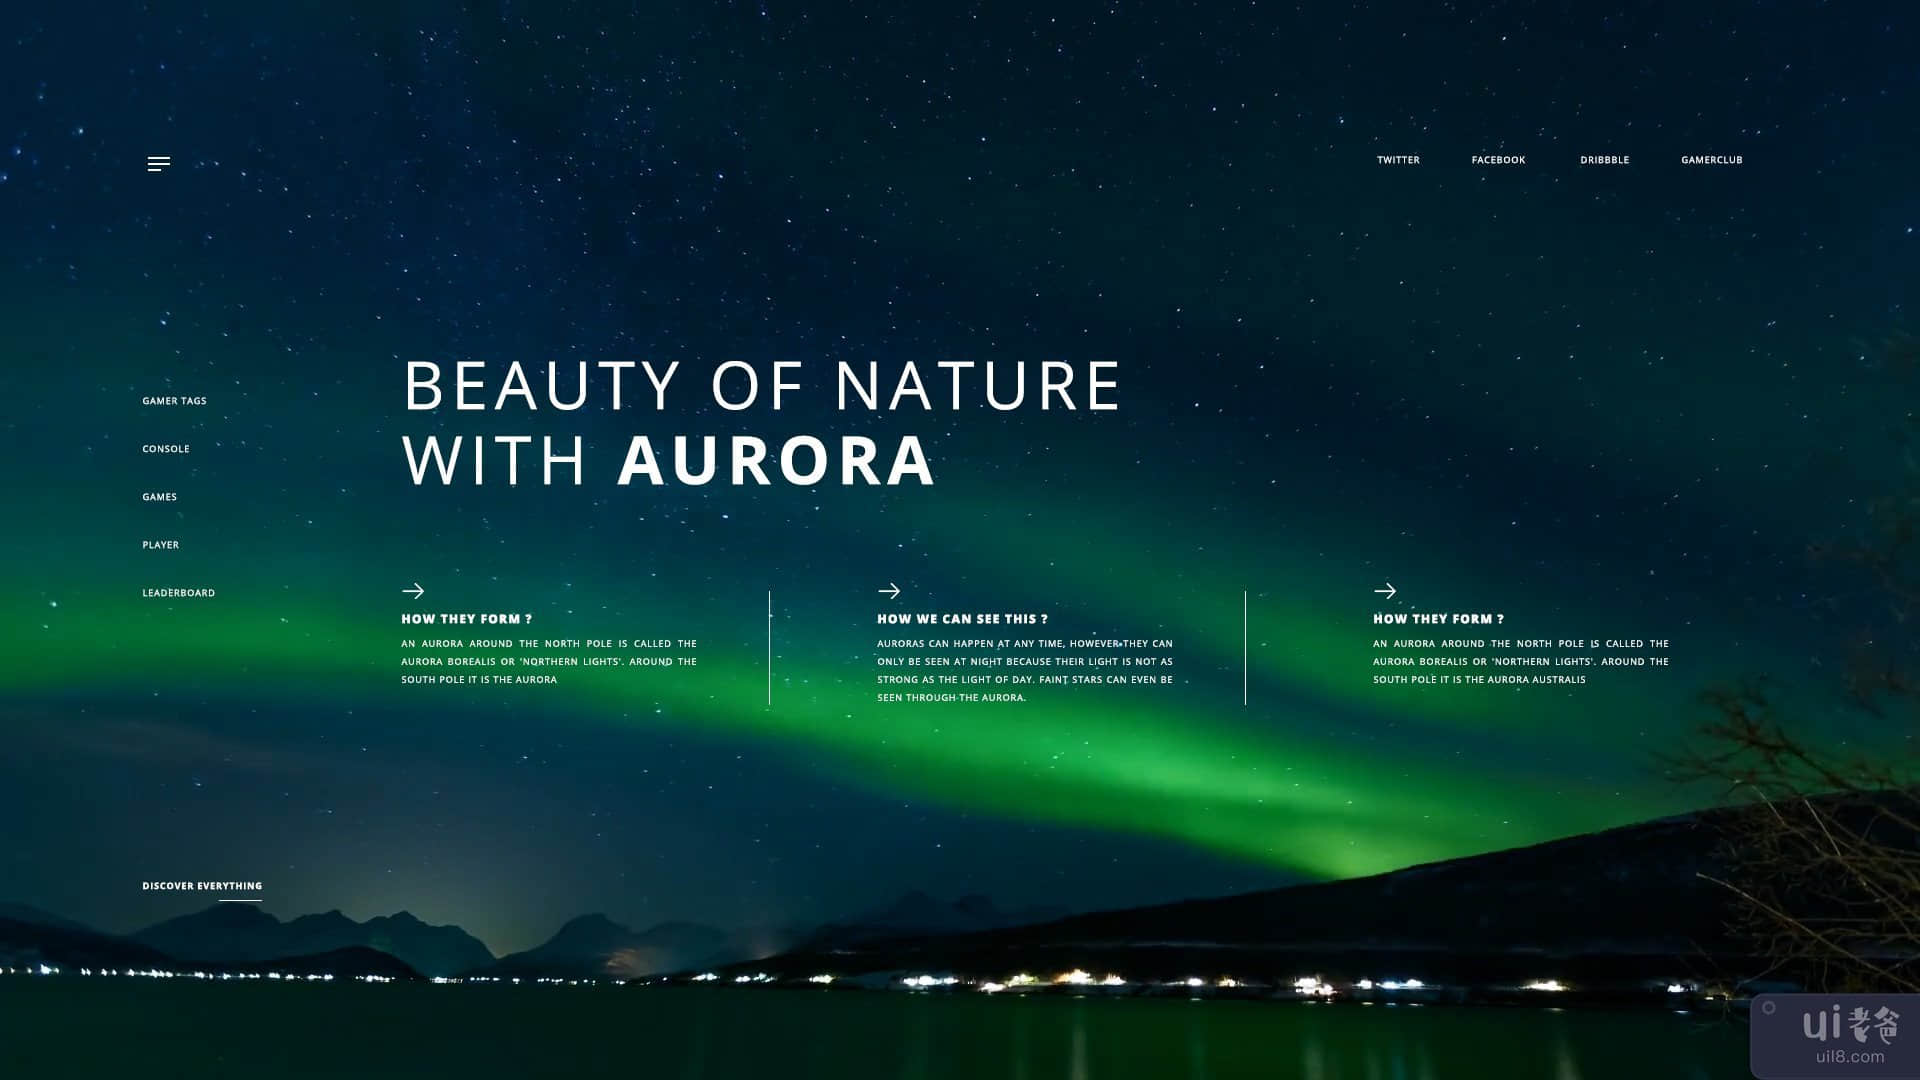 极光登陆页面(Aurora Landing page)插图